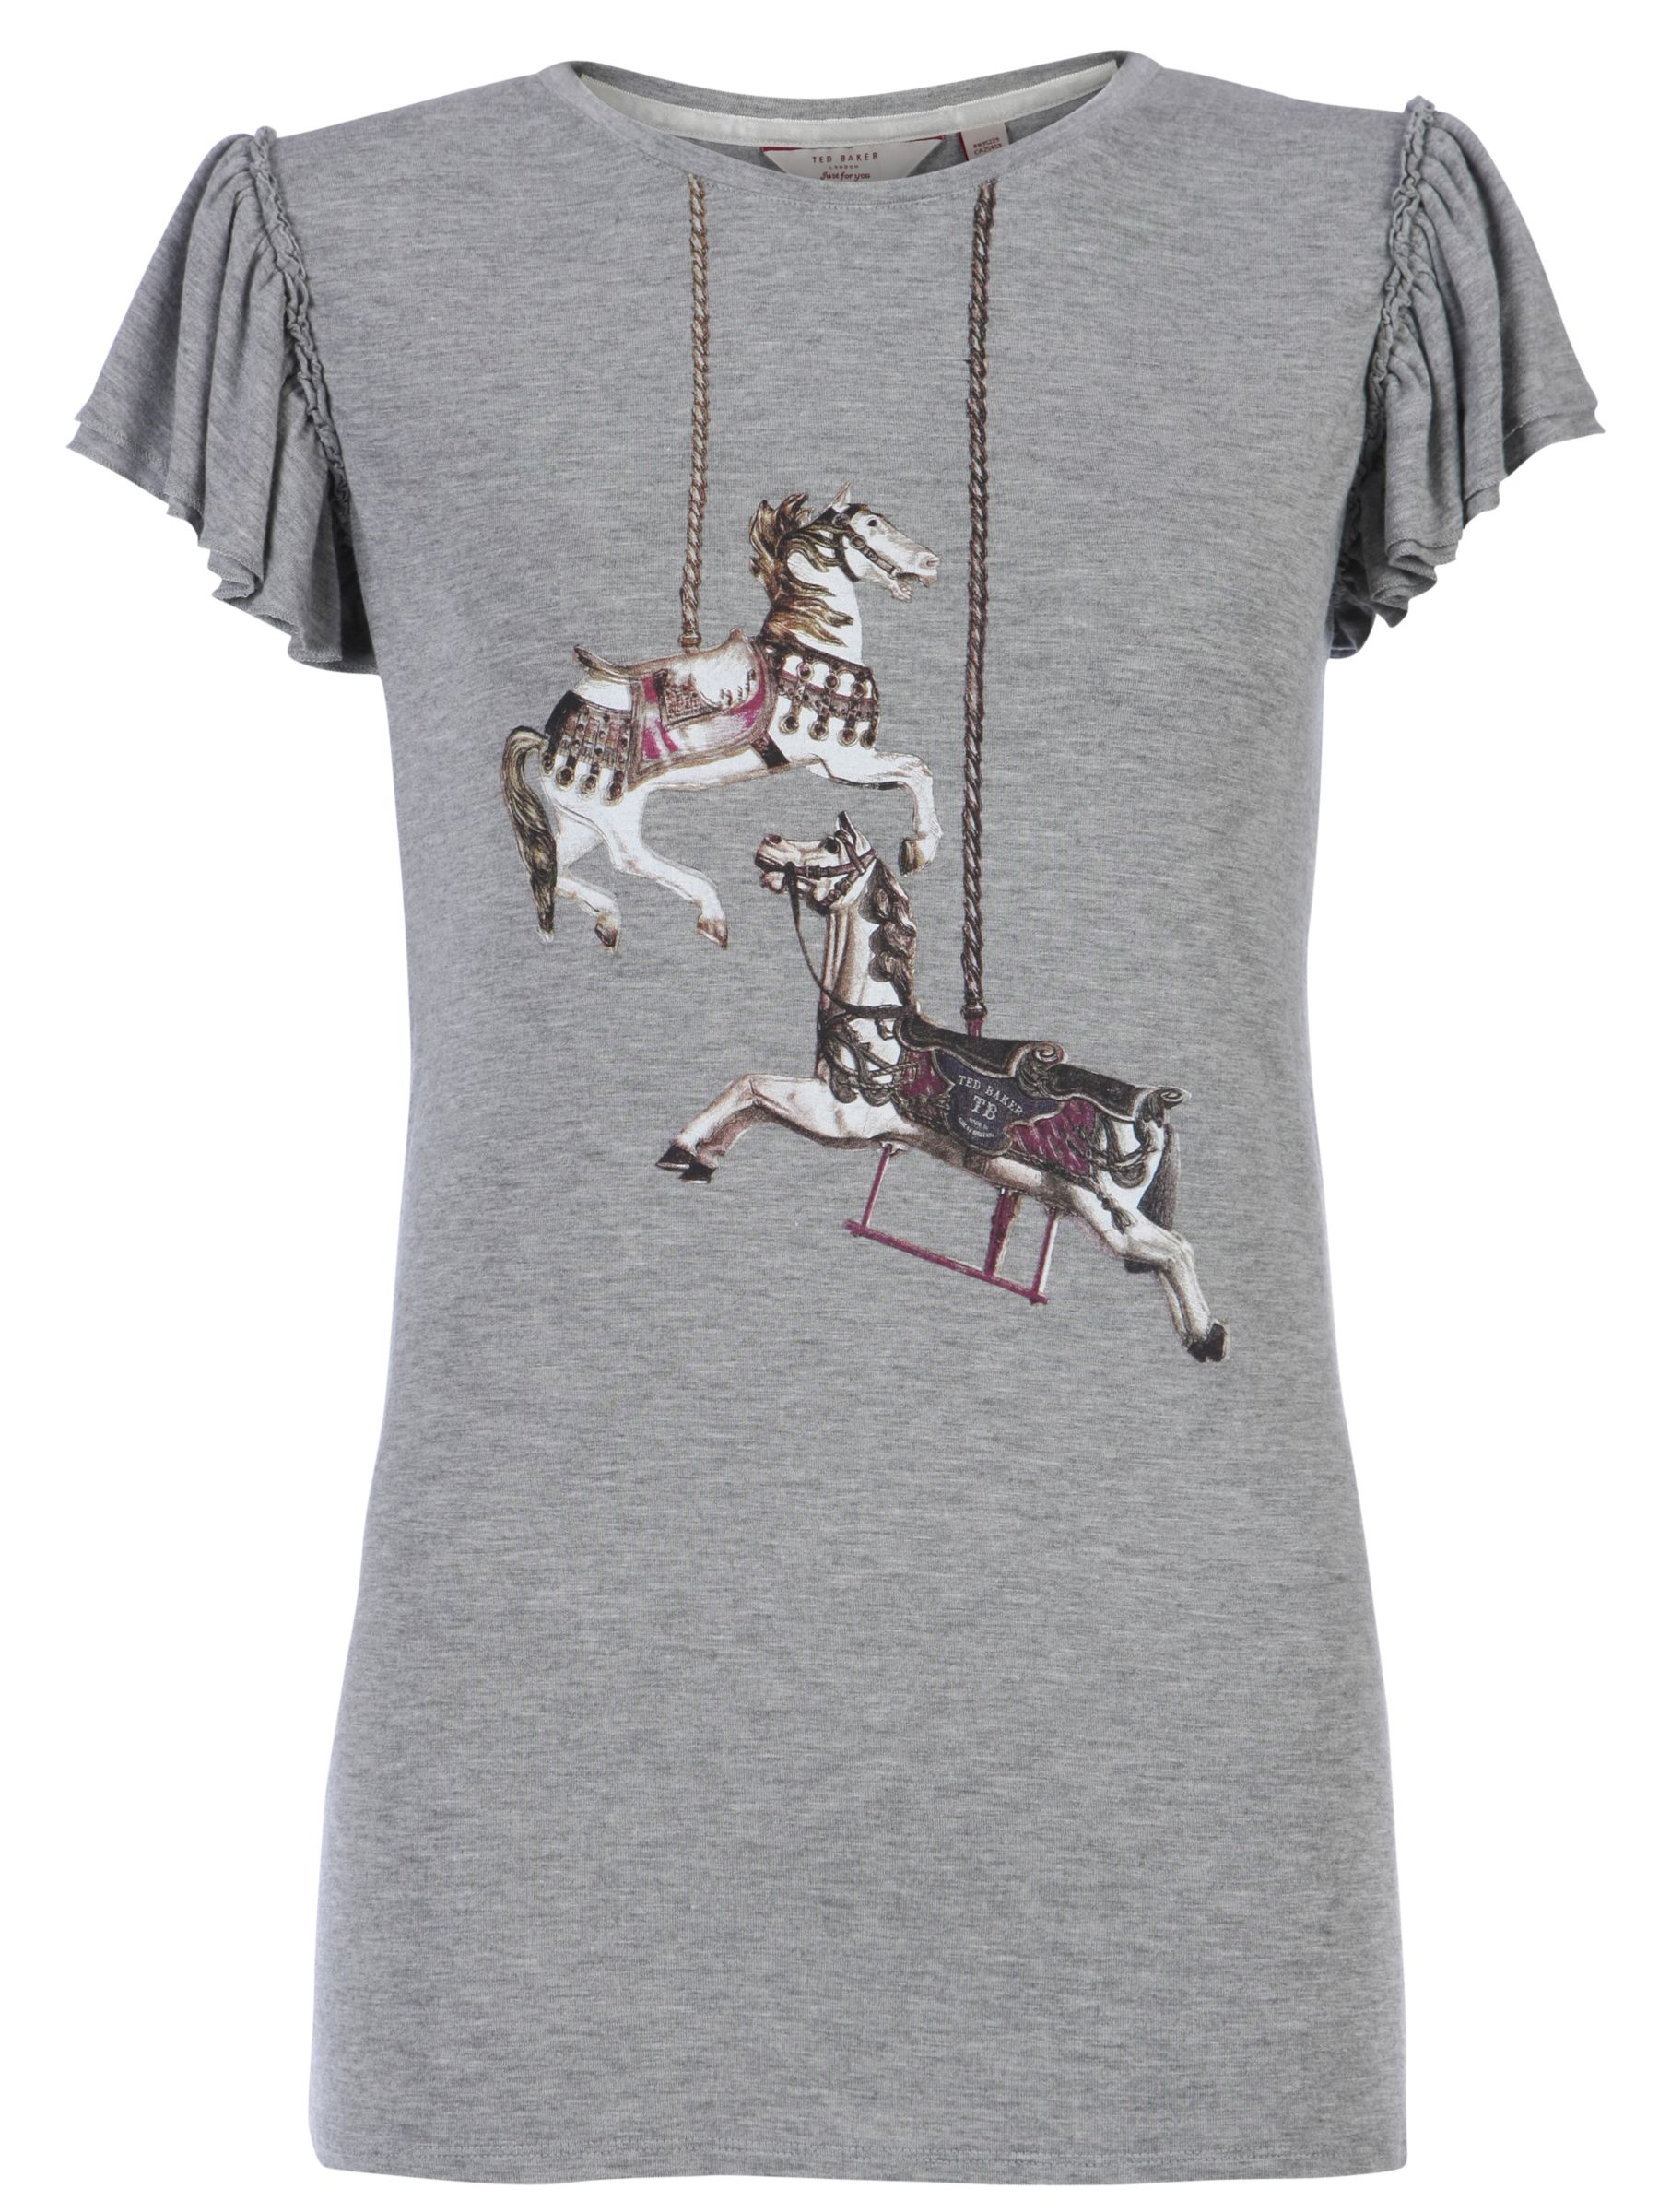 Ted Baker Carousel Print T-Shirt, Grey Marl